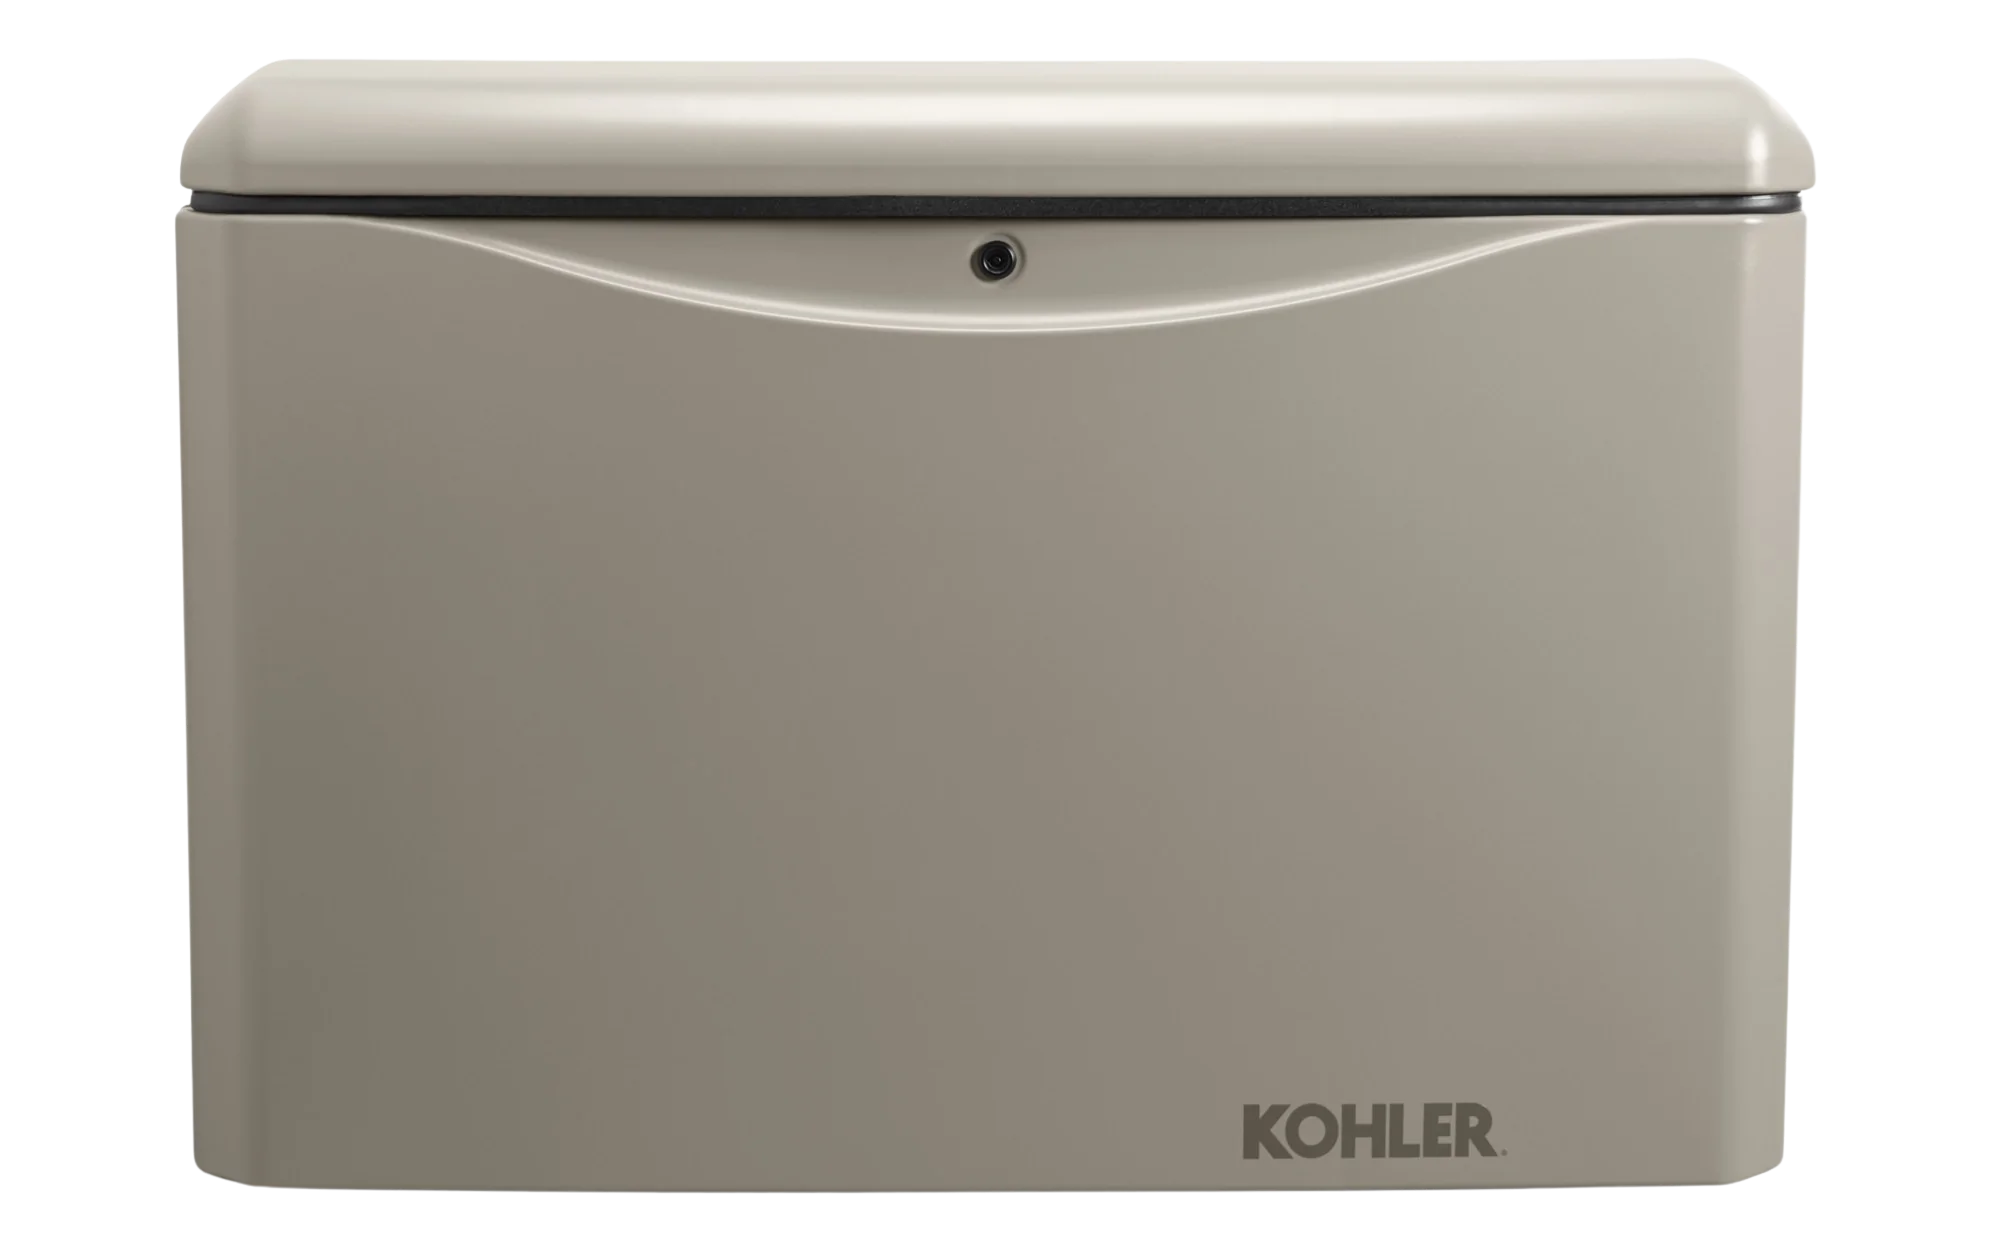 Kohler, Kohler 20RCA-QS7 20KW 120/208V 3-Phase Standby Generator with OnCue Plus New